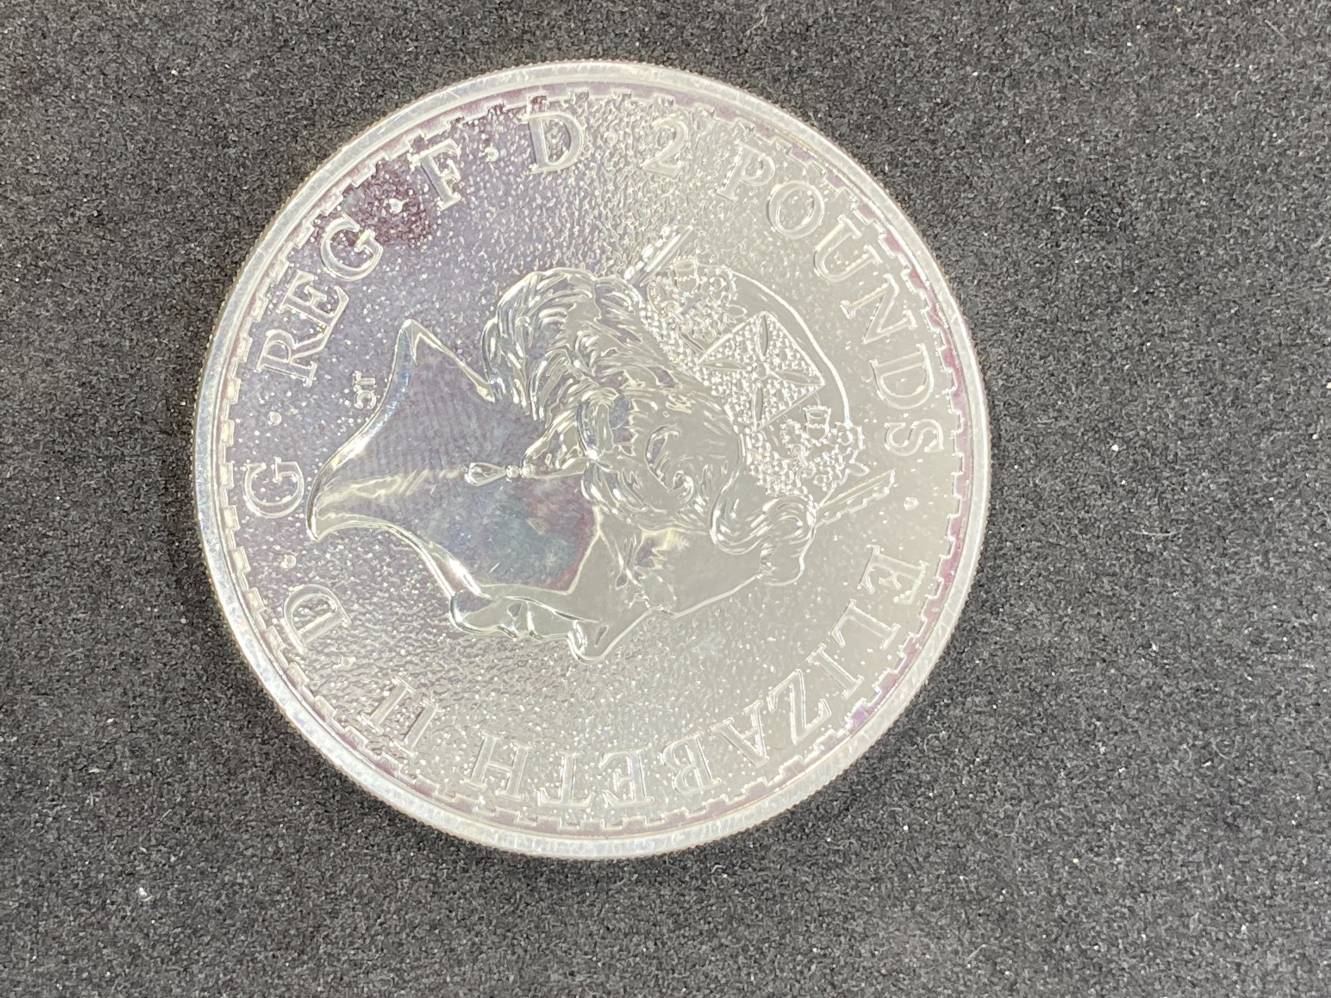 Numismatics, Coins, Bullion: Twenty-two uncirculated 2016 GB £2 coins, fine silver, Britannia (